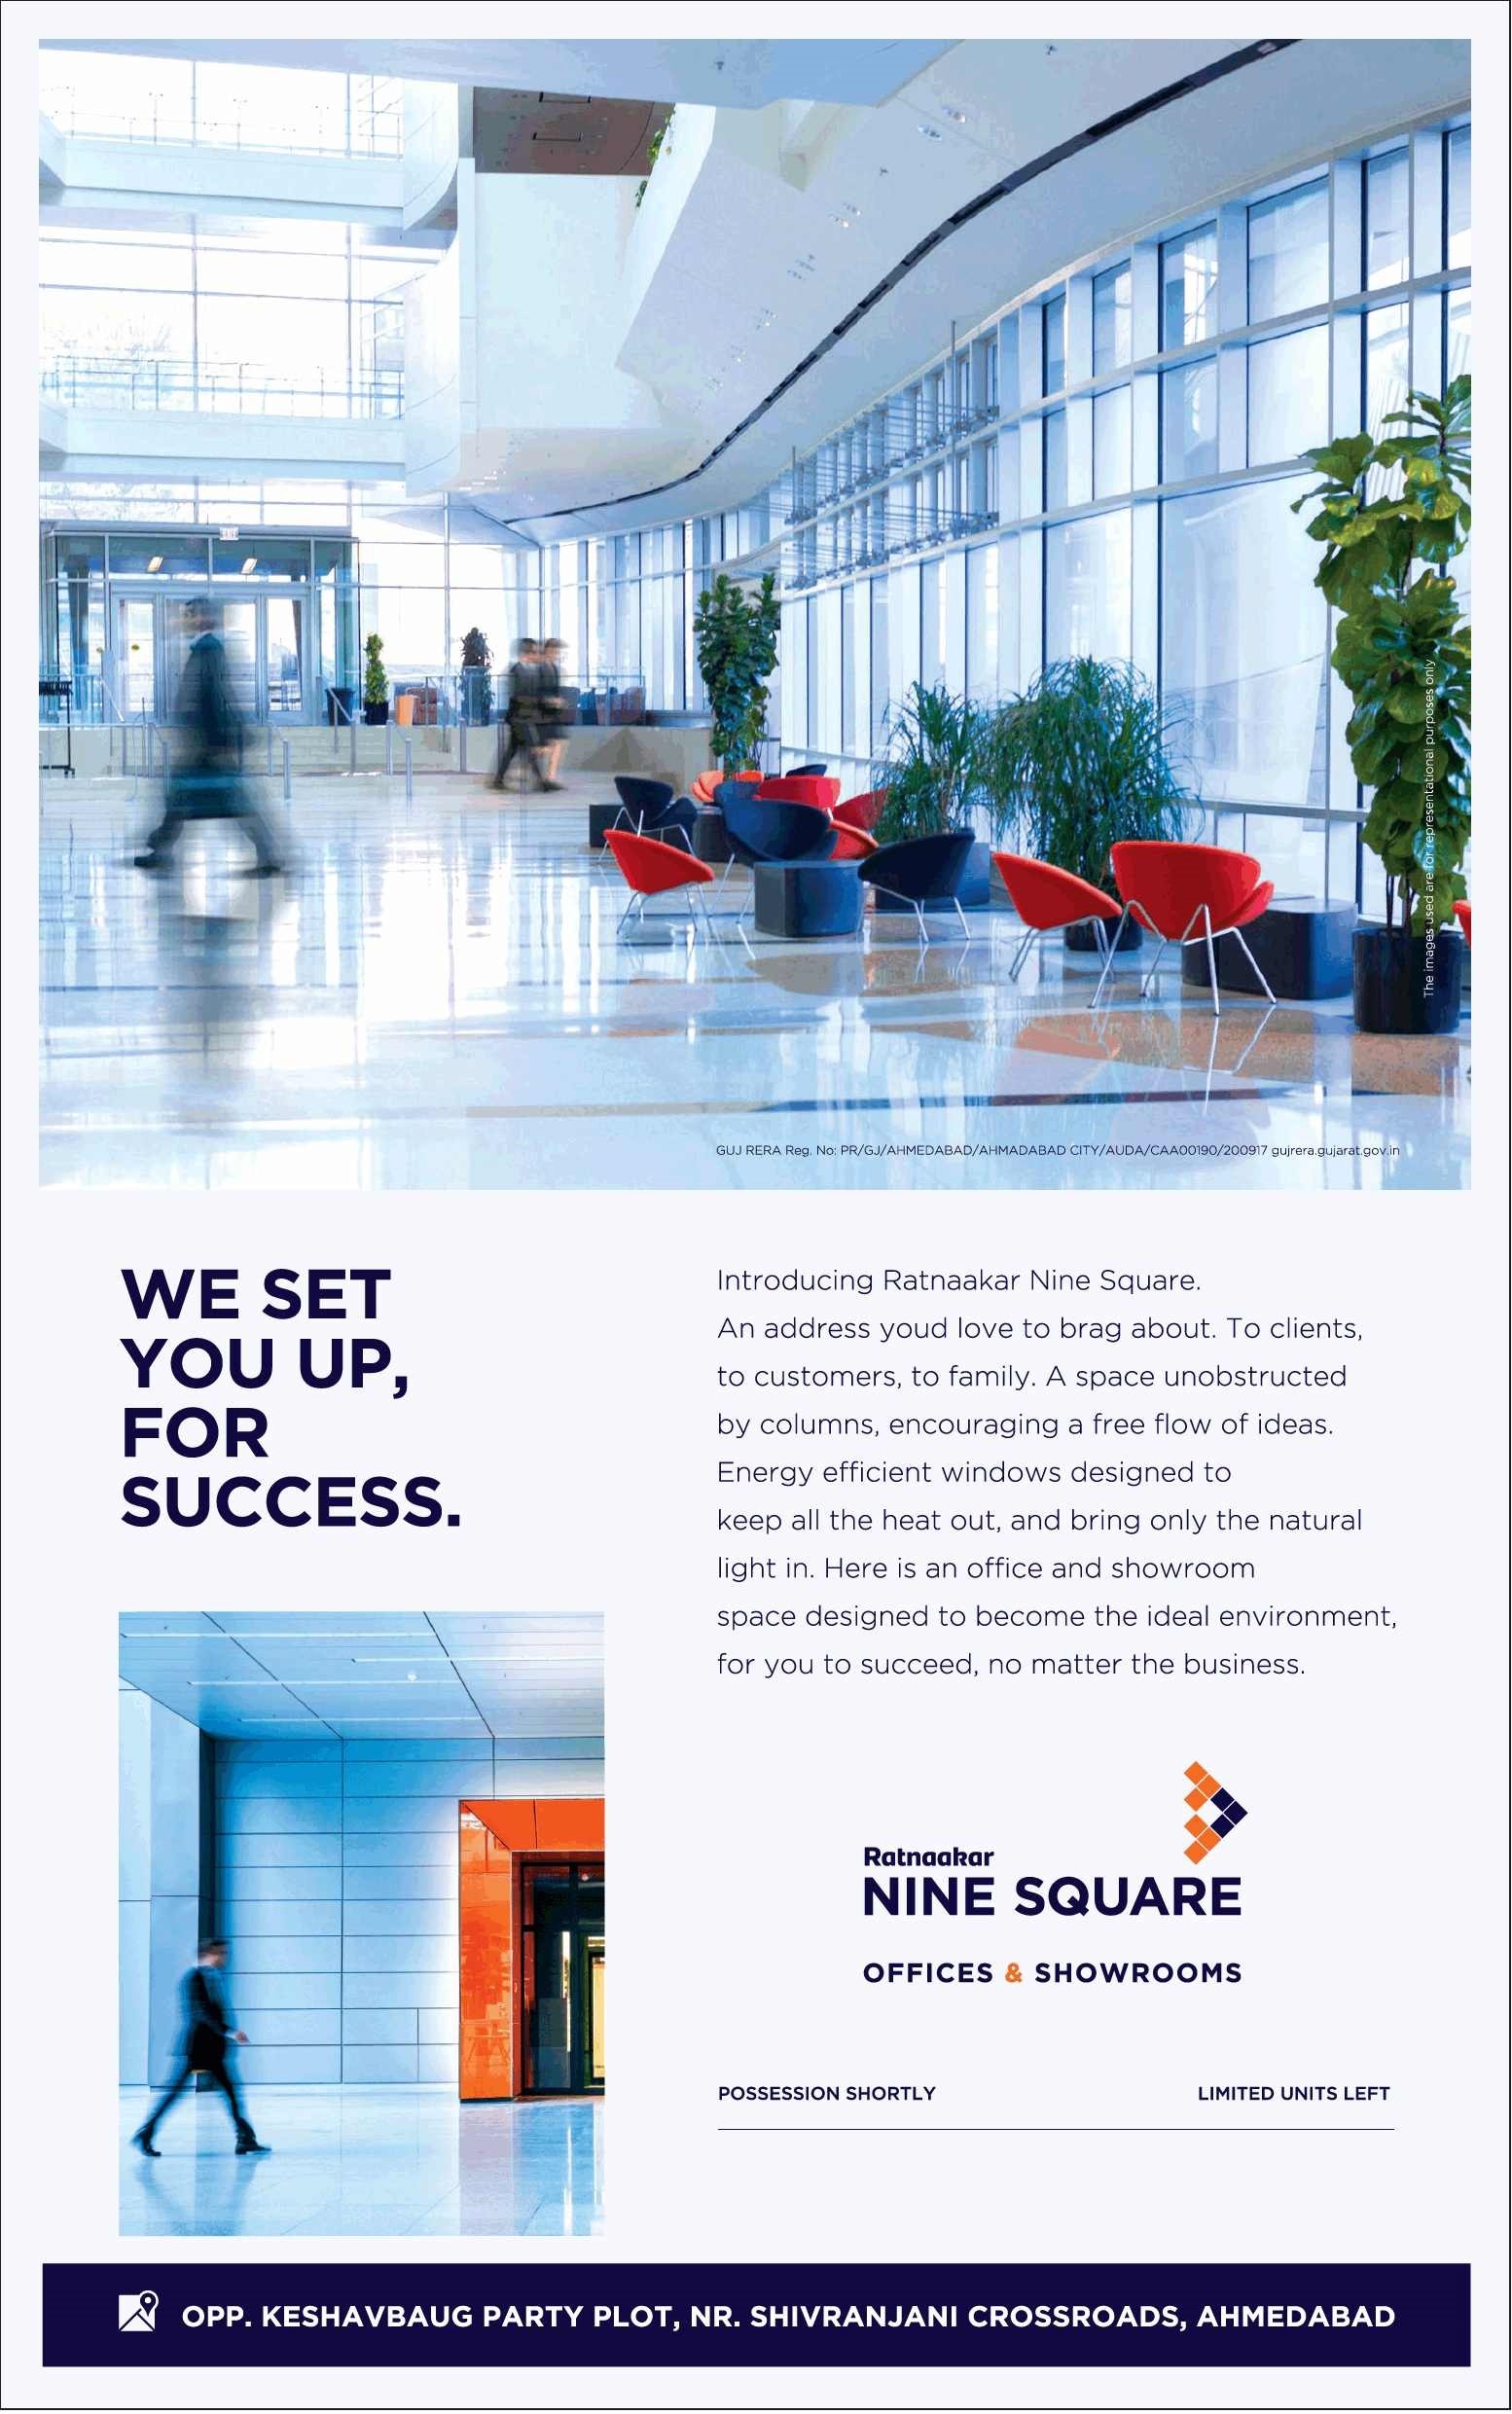 Ratnaakar Nine Square introducing offices & showrooms in Ahmedabad